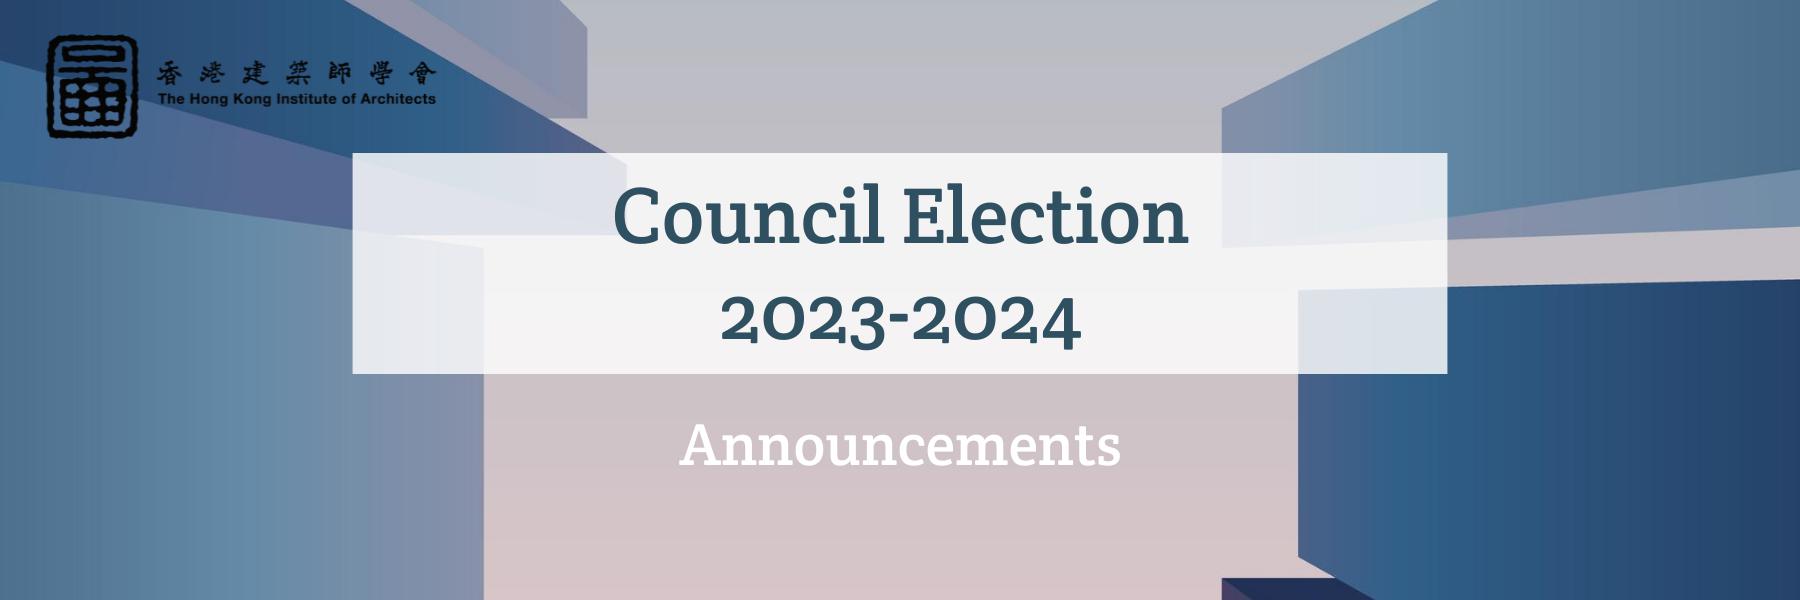 Council Election for 2023-2024: Announcement